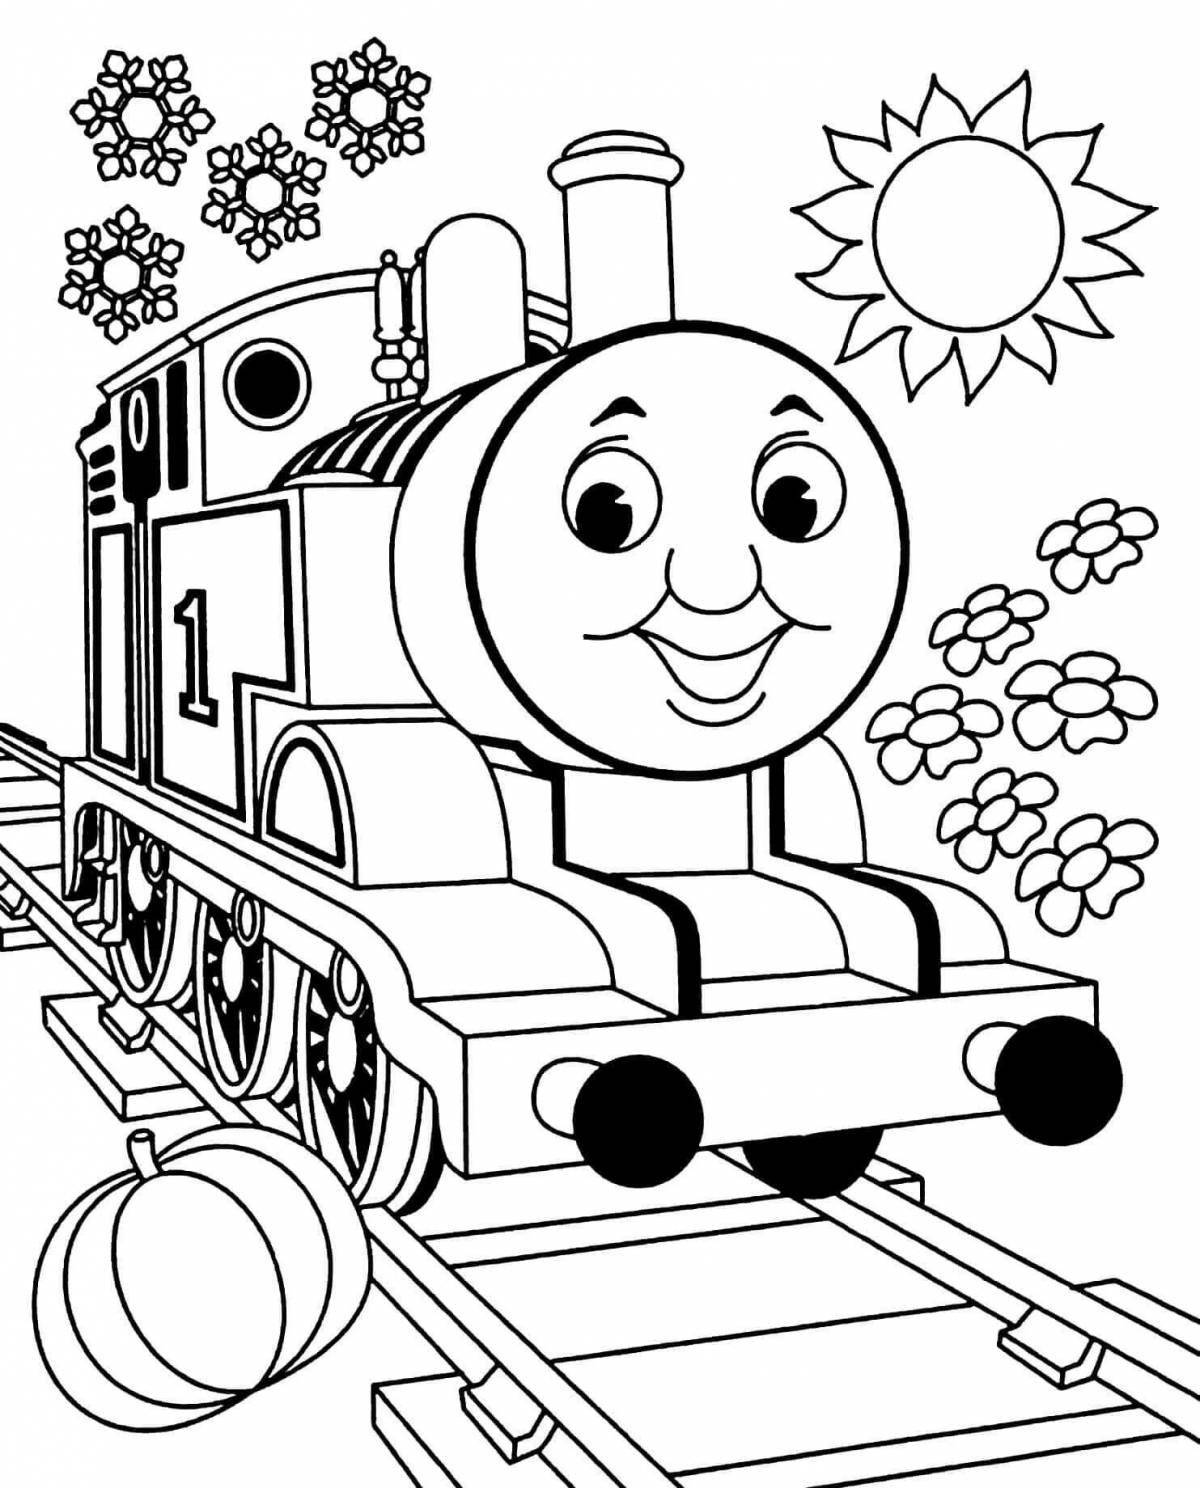 Colorful fun train for kids coloring book